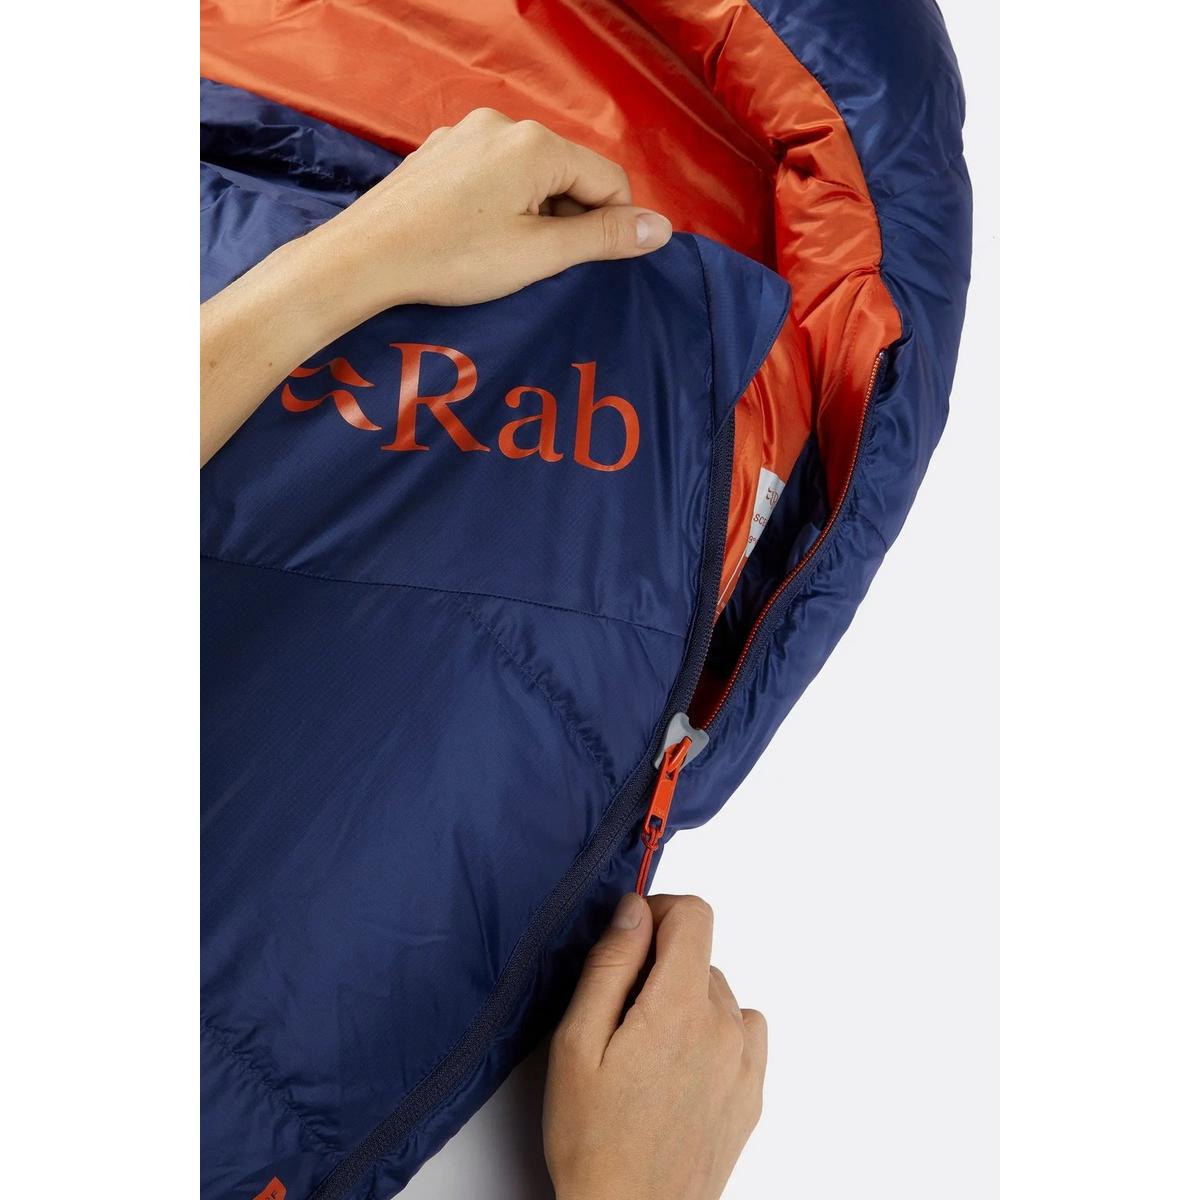 Rab Women's Ascent 700 Sleeping Bag - Merino Blue